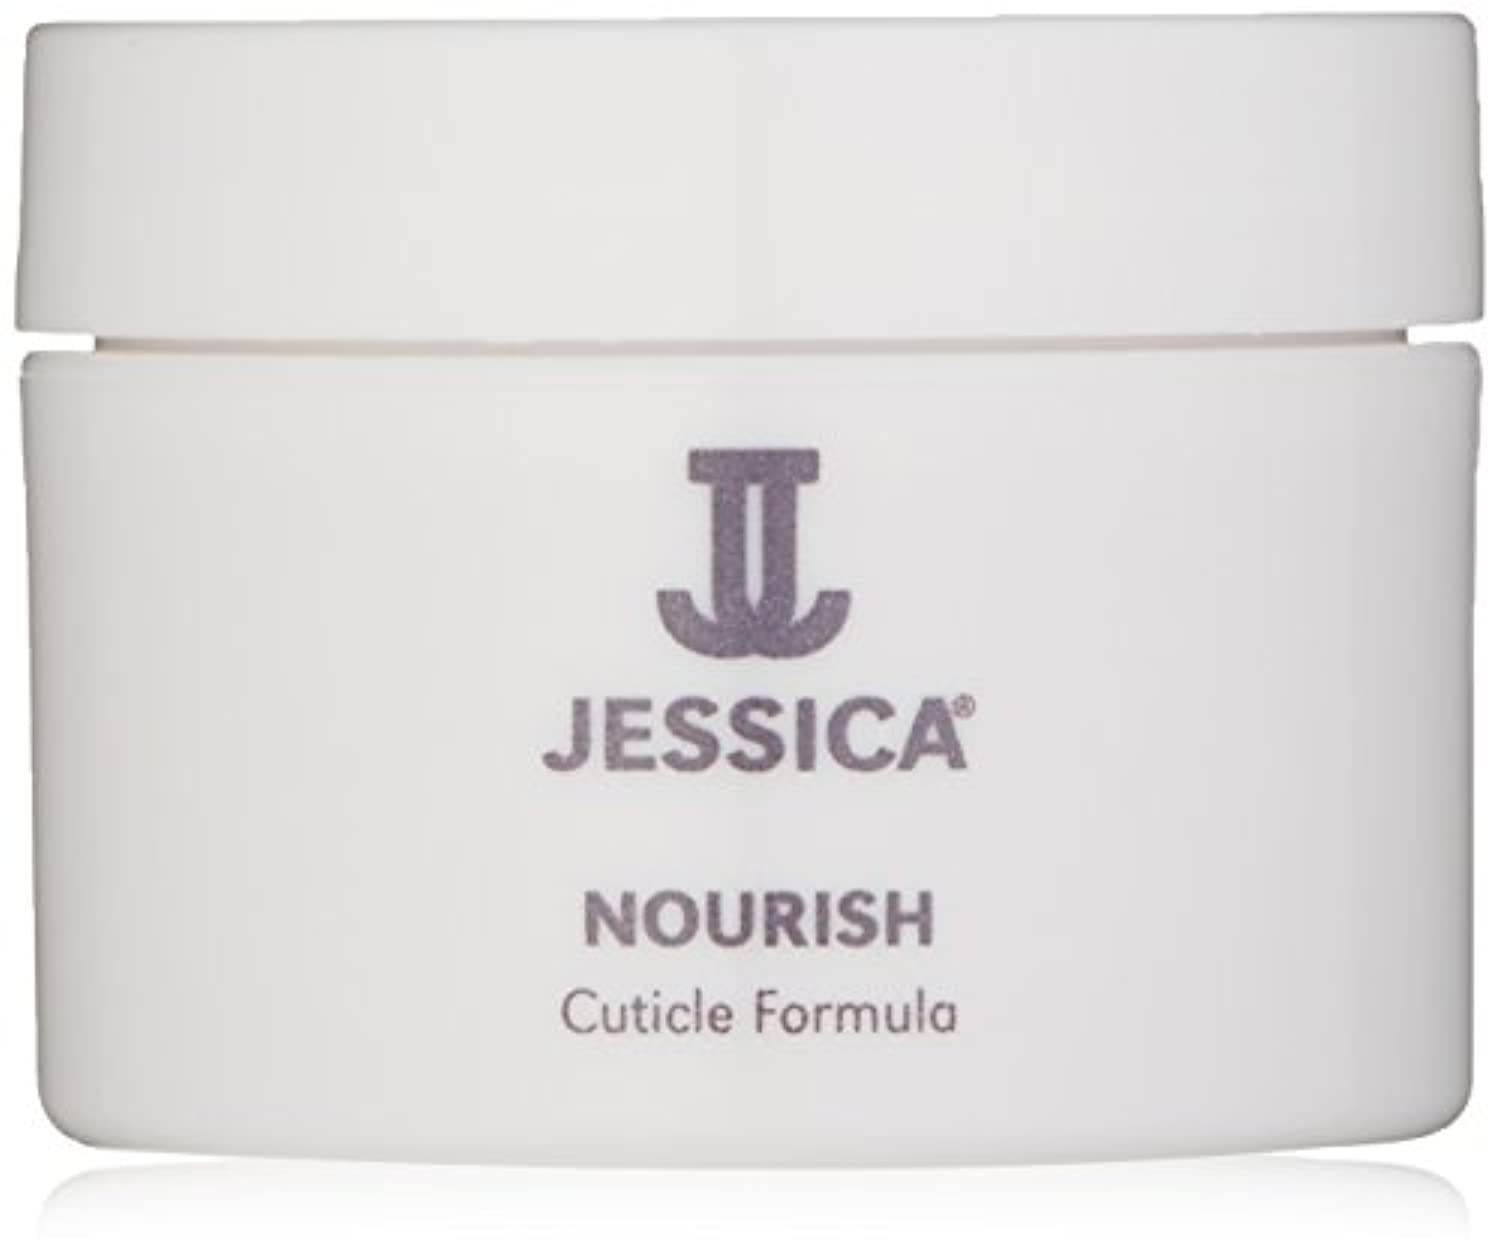 Jessica Nourish Cuticle Formula, 1 oz